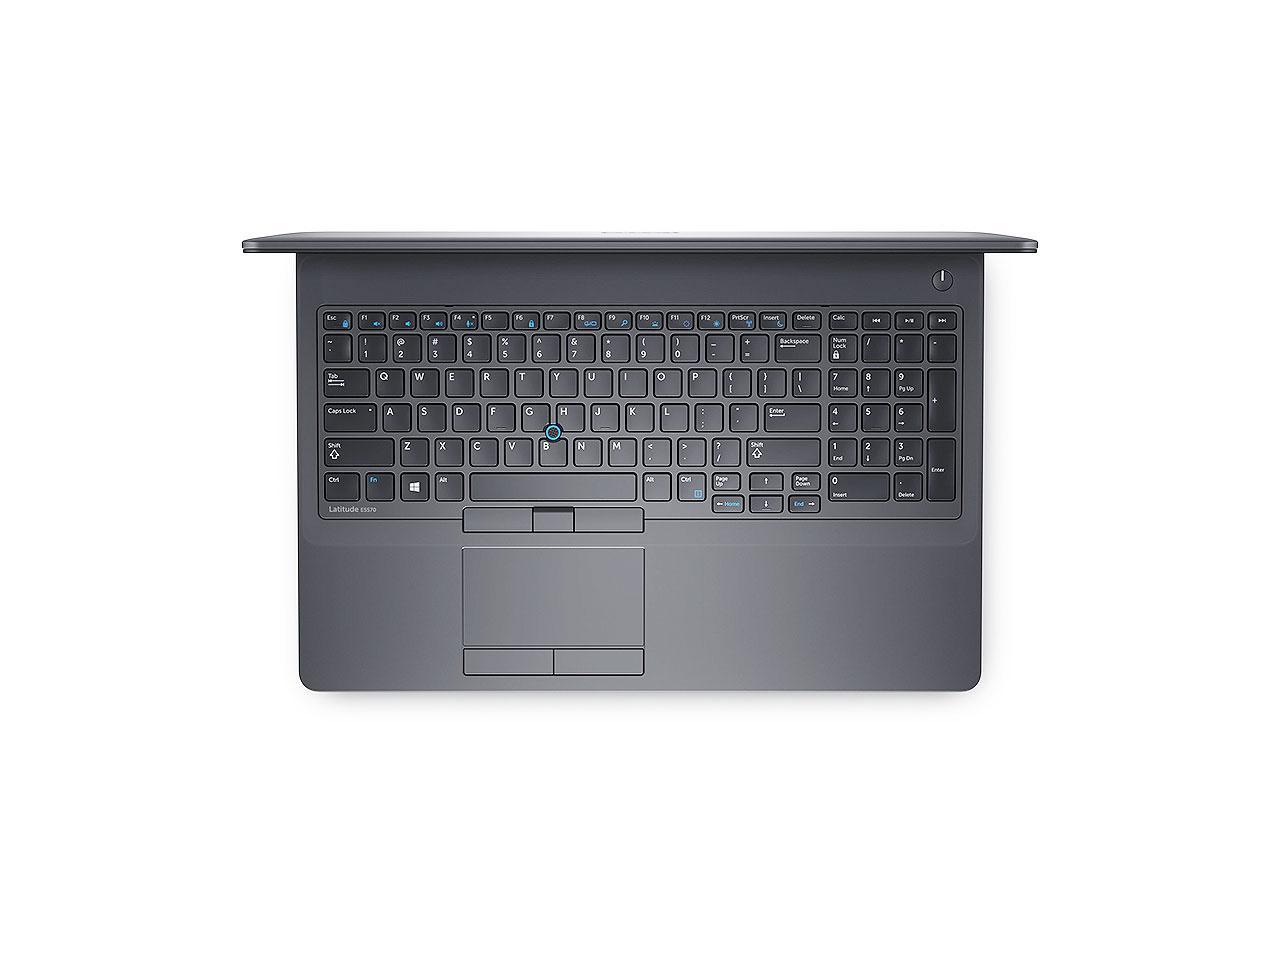 Dell Latitude E5570 Laptop Computer, 2.40 GHz Intel i5 Dual Core Gen 6, 8GB DDR3 RAM, 256GB SSD Hard Drive, Windows 10 Professional 64 Bit, 15" Widescreen Screen (B GRADE)